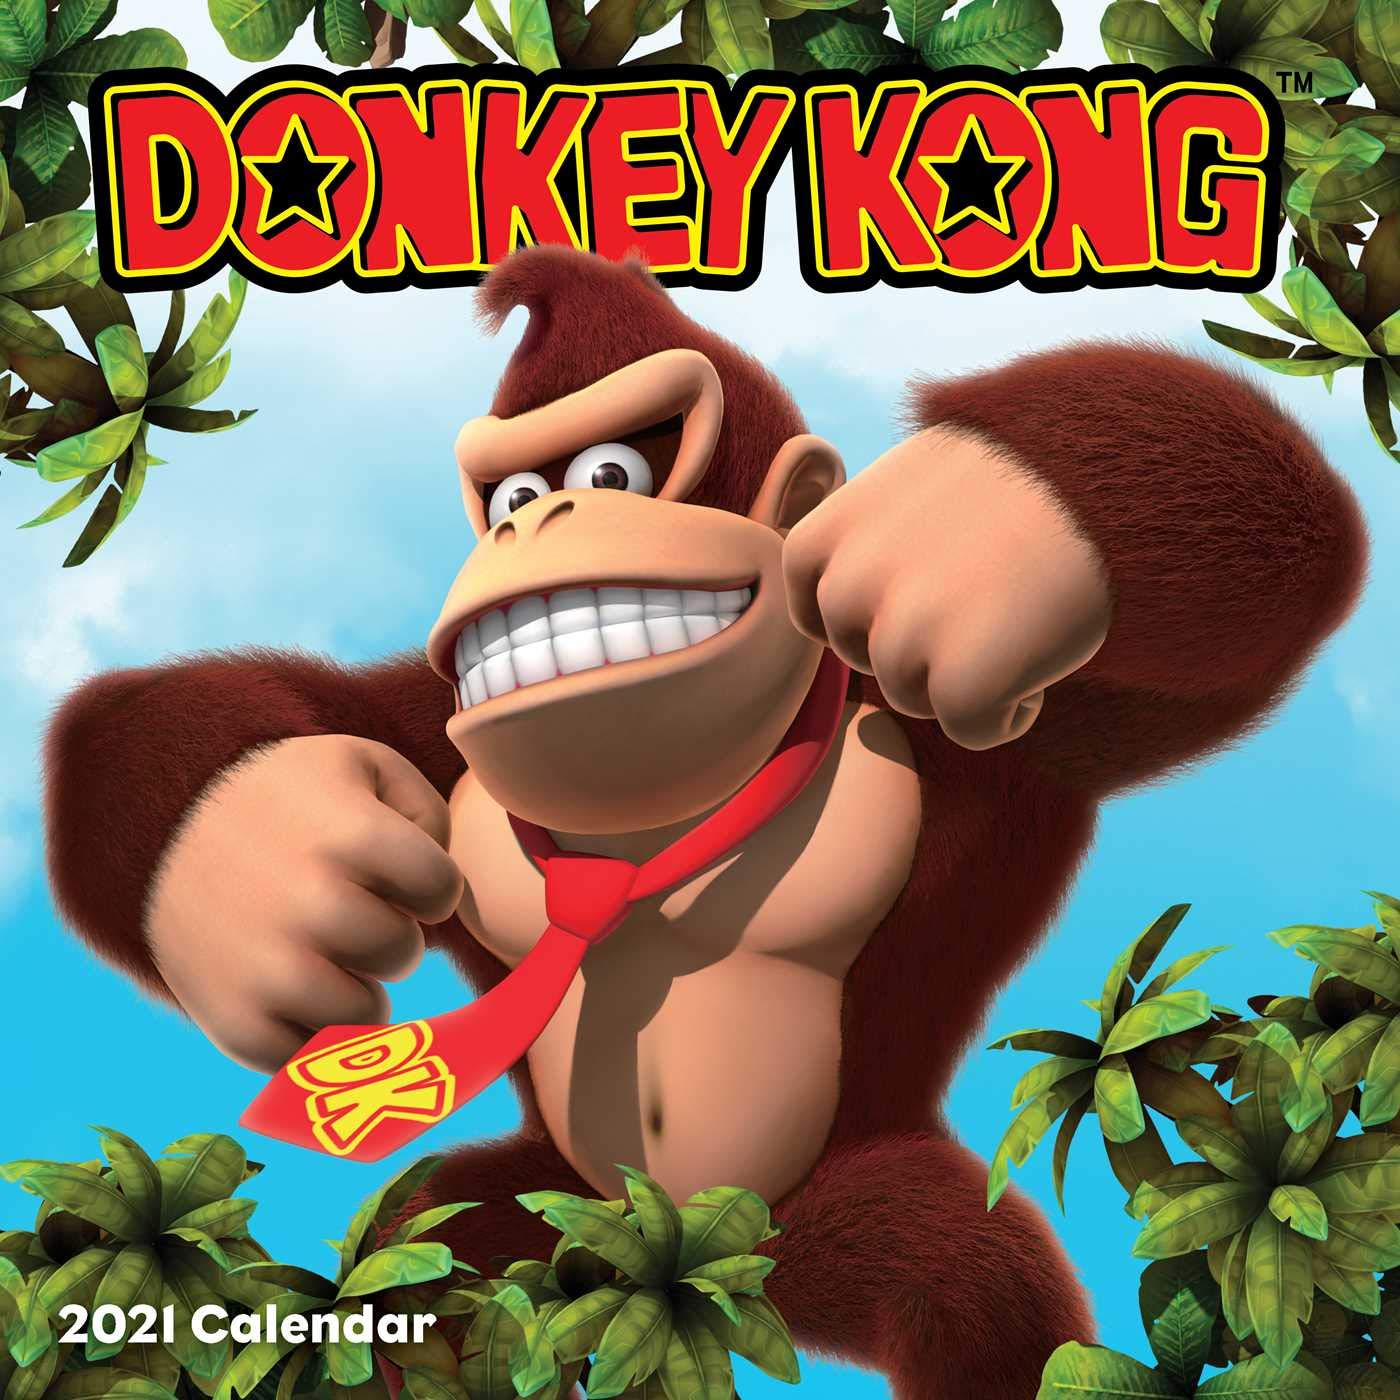 Donkey kong mac download